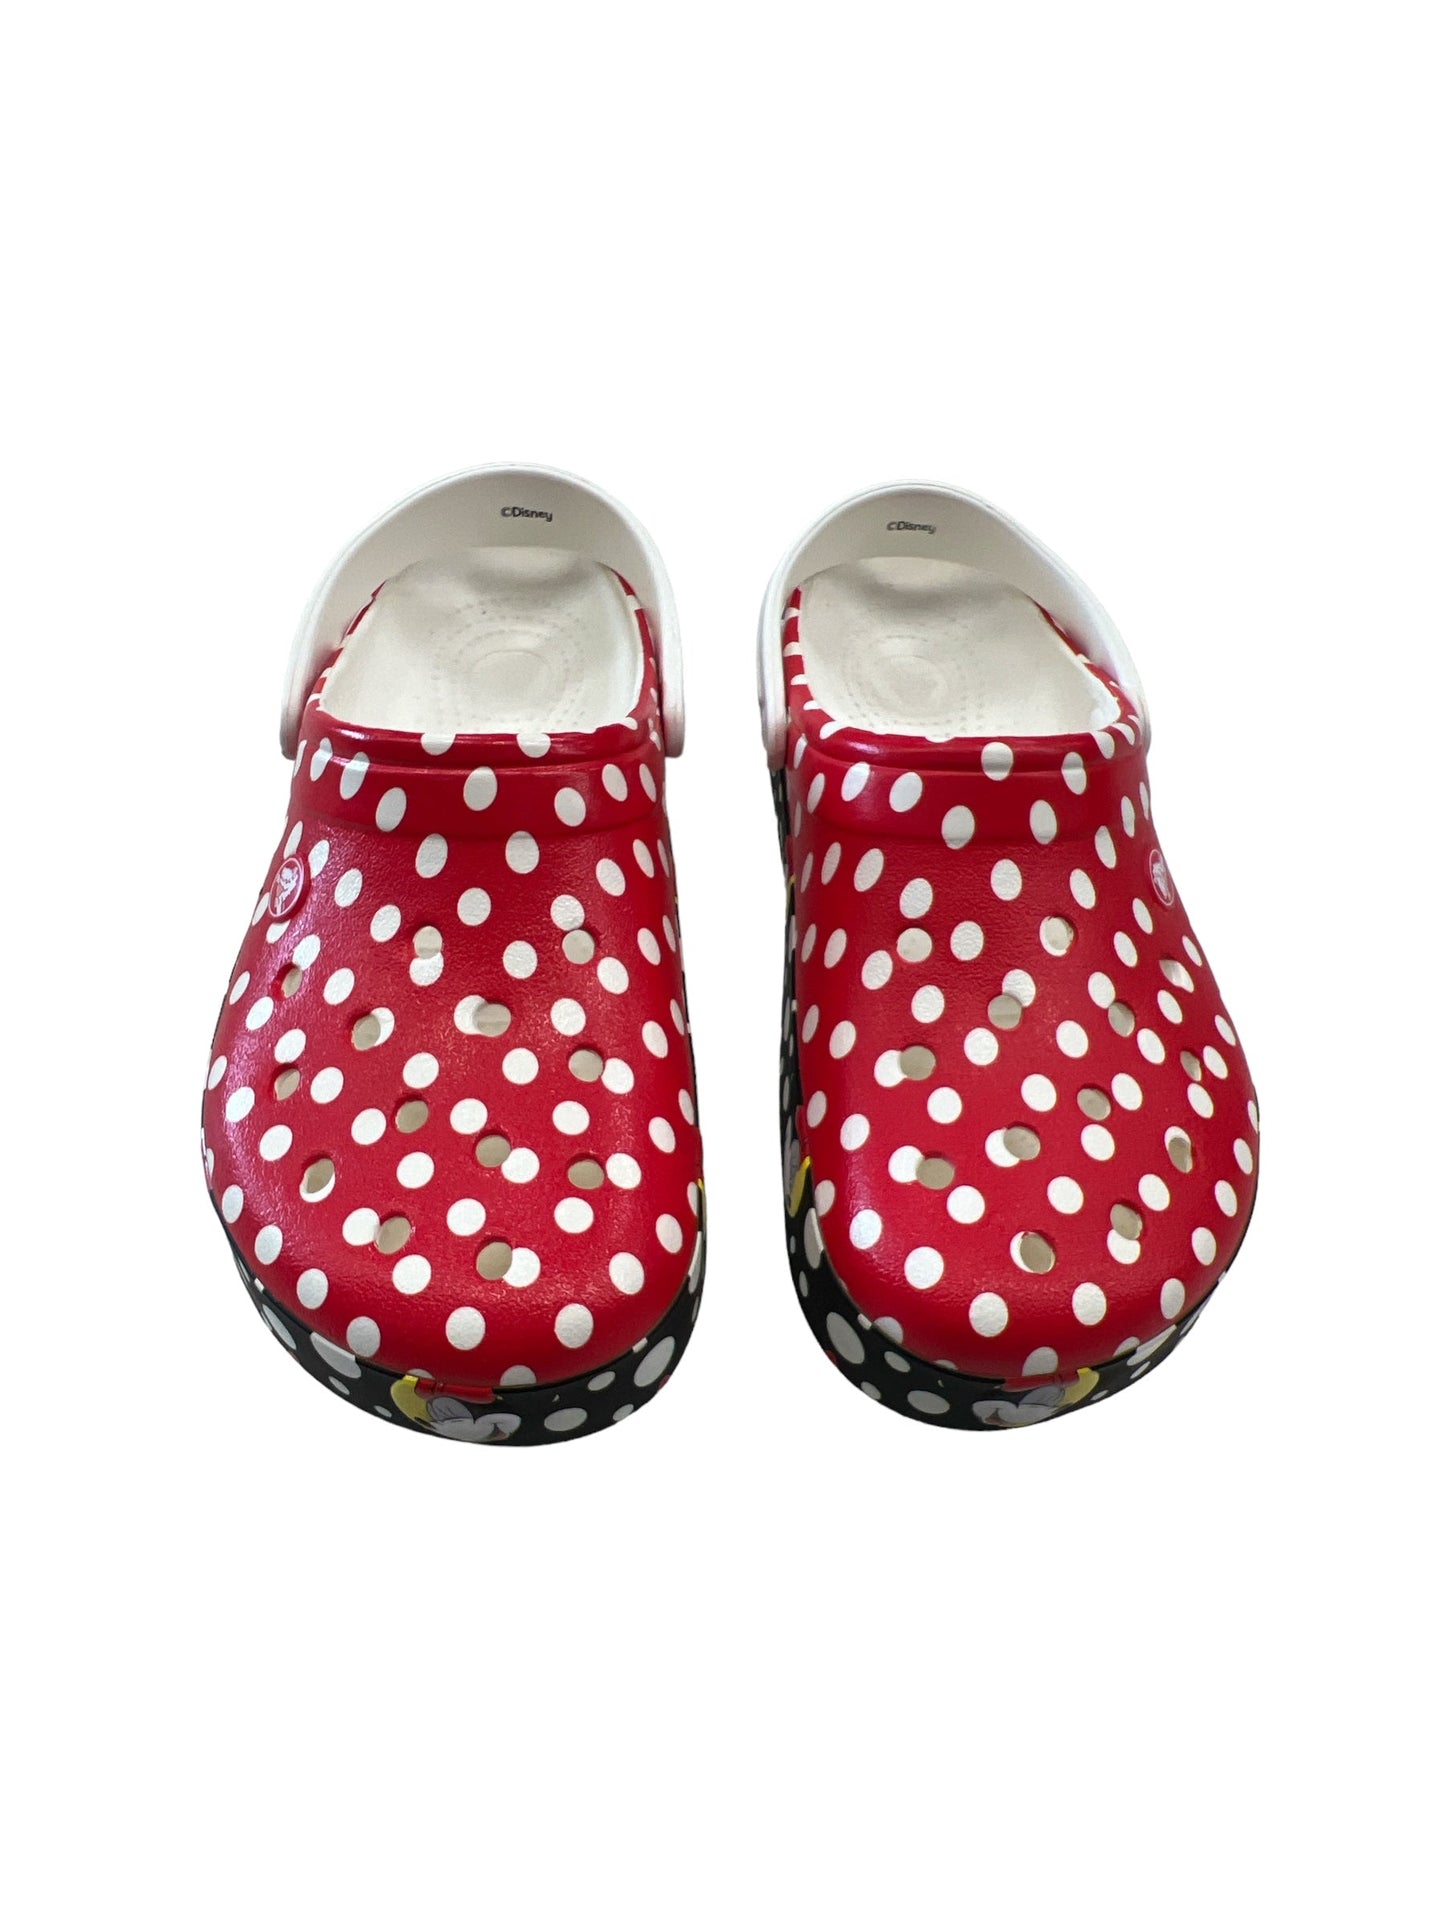 Red Shoes Flats Crocs, Size 8